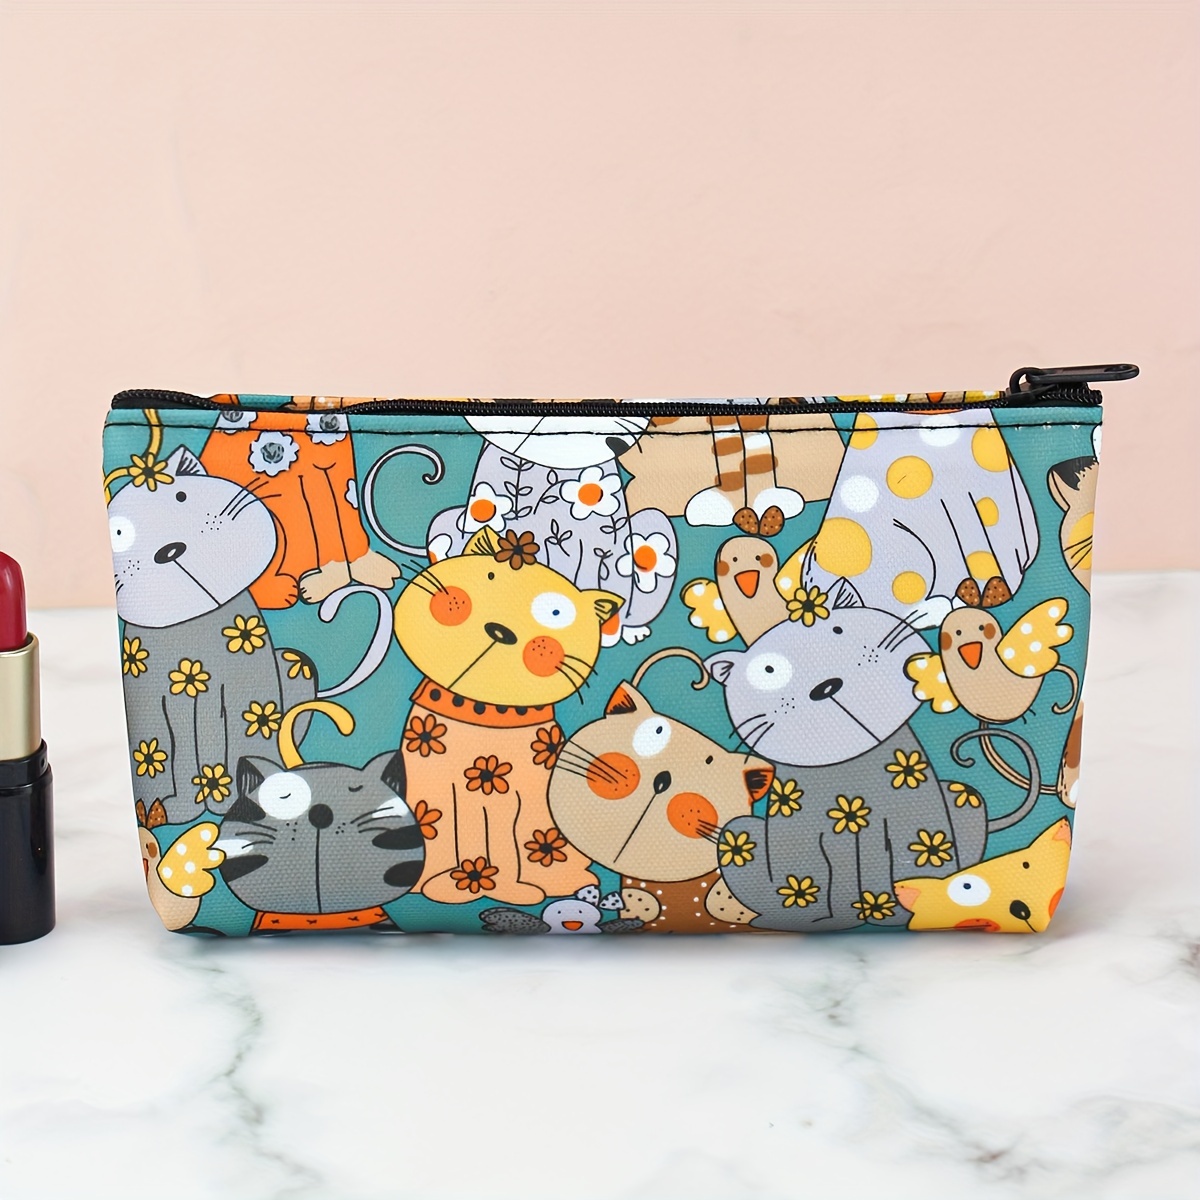 

Cute Cartoon Cat Makeup Pouch, Fashion Cosmetic Travel Bag, Multi-purpose Lipstick & Makeup Brush Organizer, Adorable Kitty Pencil Case, Portable Storage Bag With Secure Zipper Closure